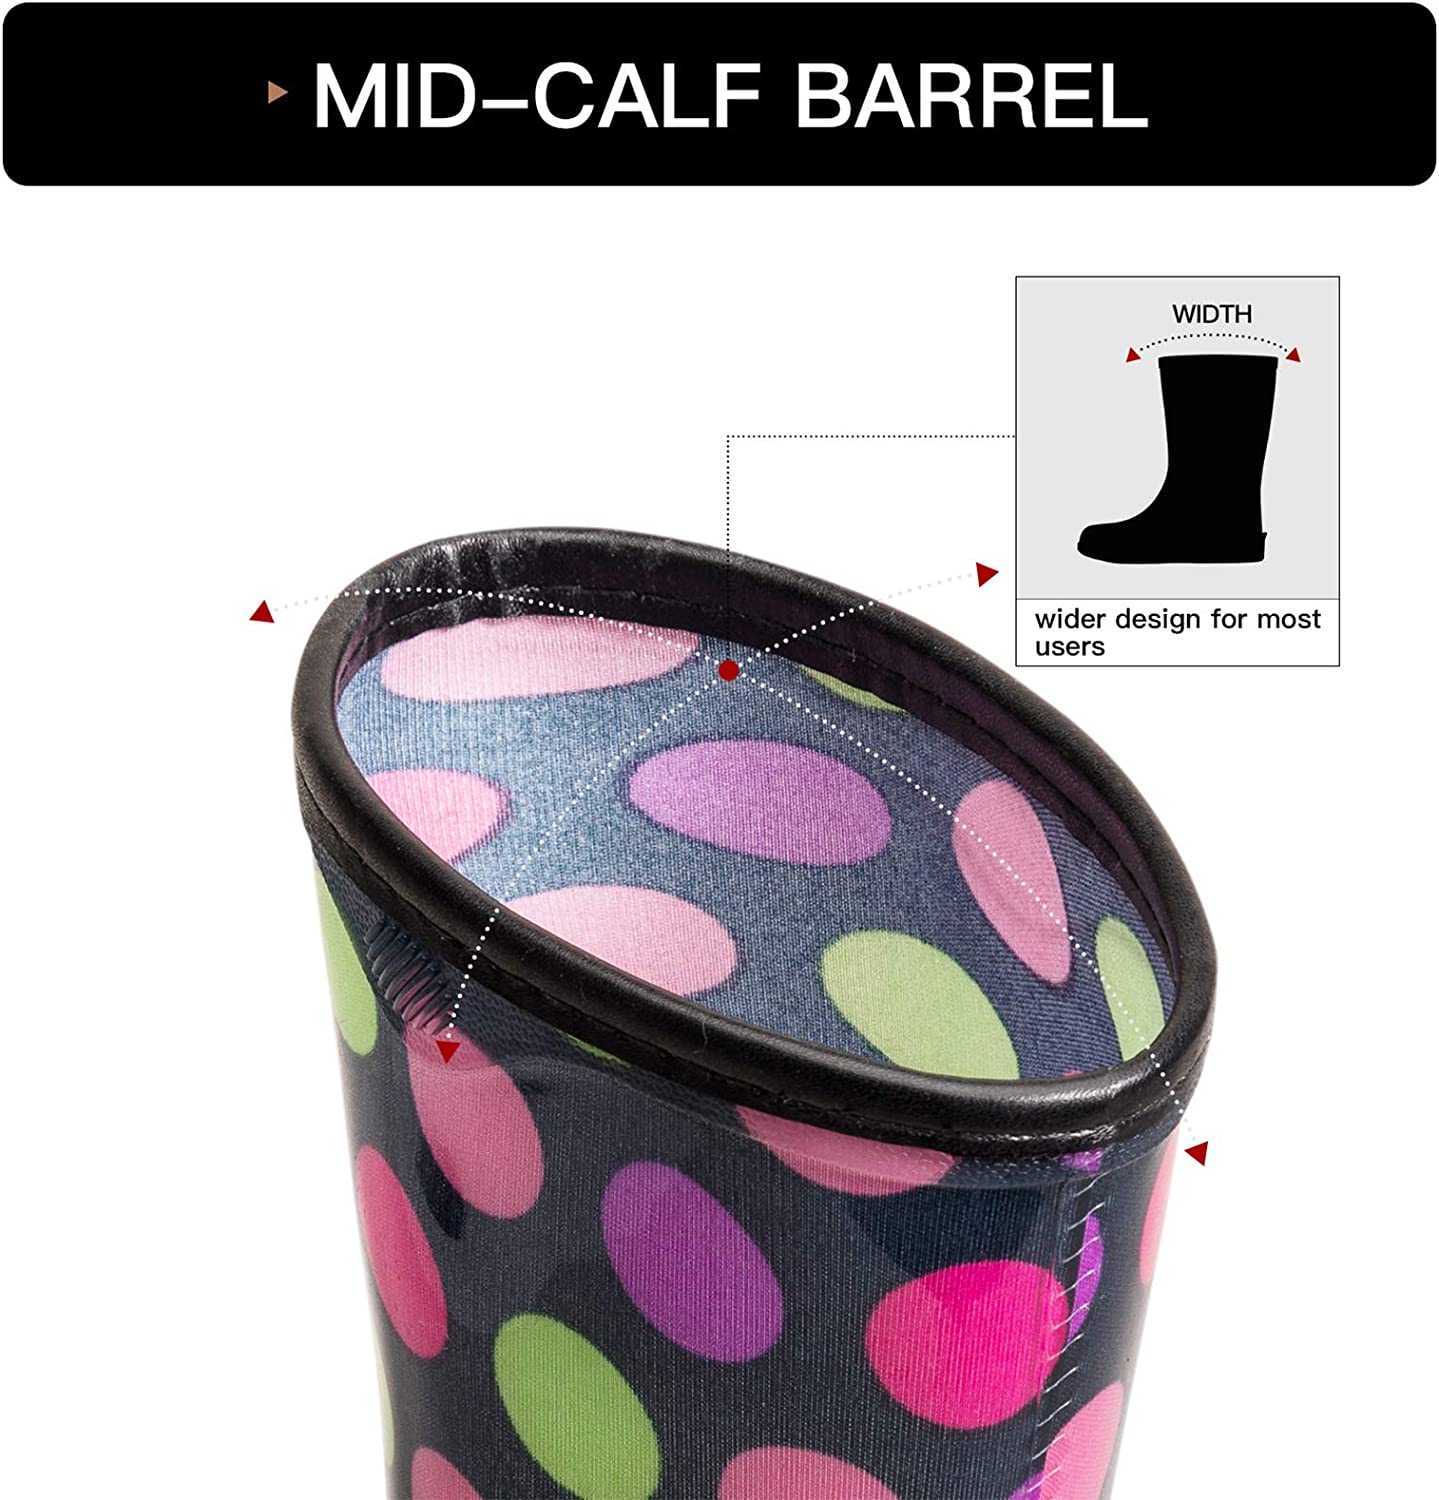 Colorful Polka Dot Waterproof Print Mid-Cut Rain Boots - MYSOFT